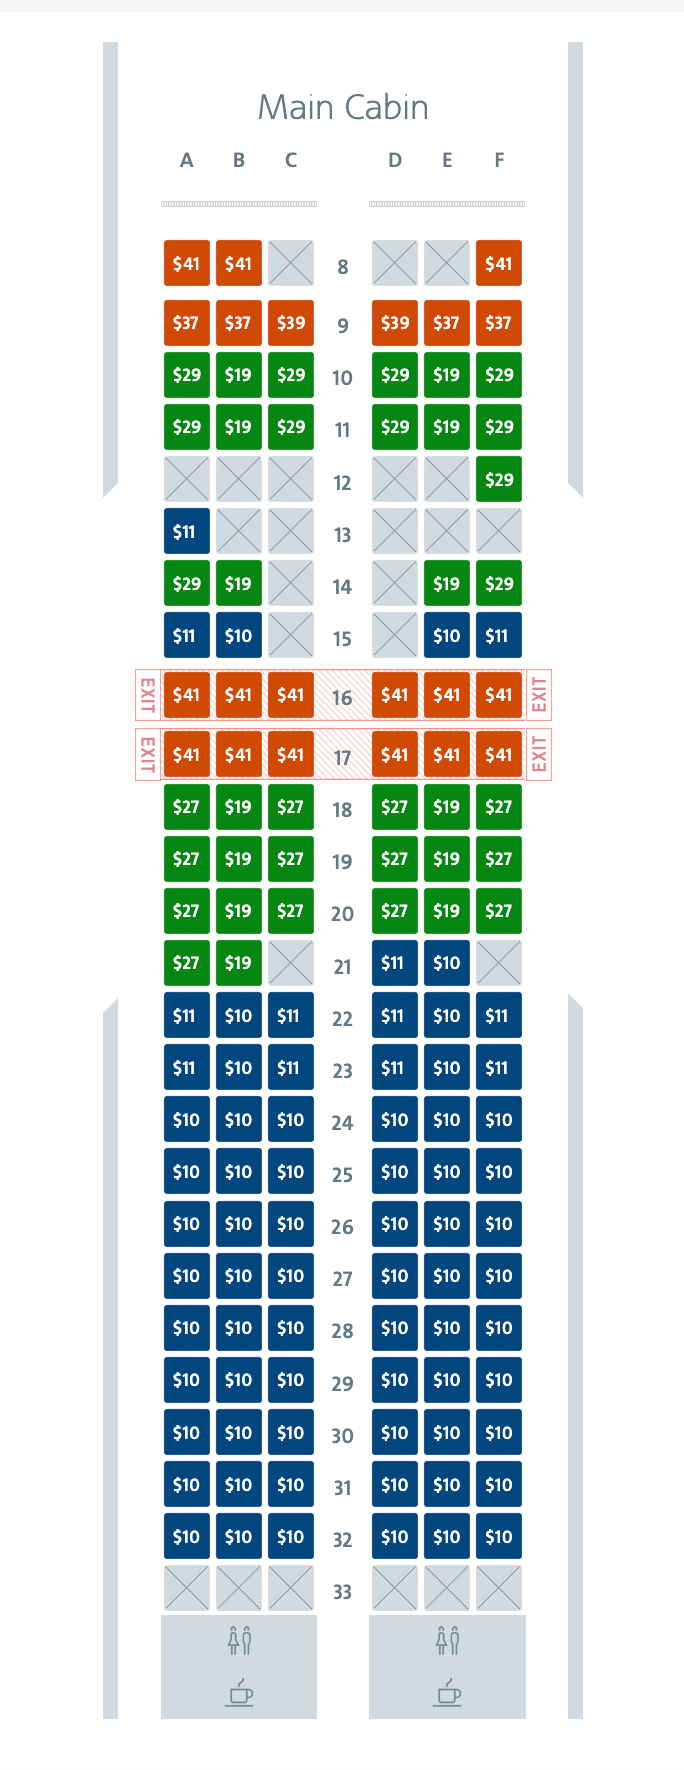 seat prices